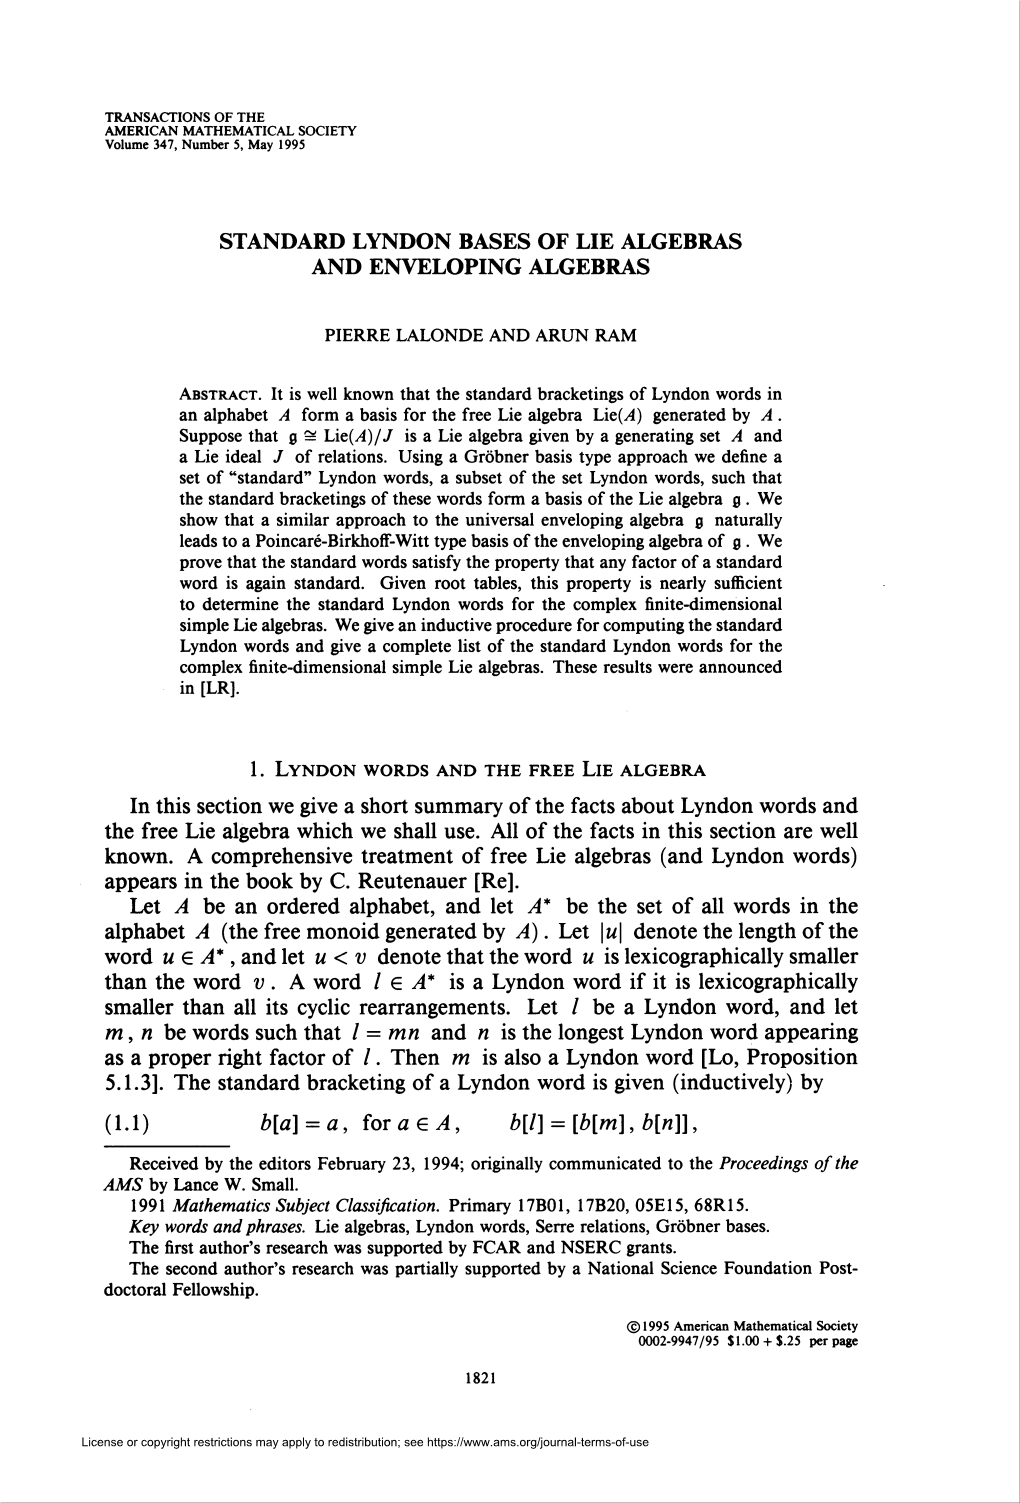 Standard Lyndon Bases of Lie Algebras and Enveloping Algebras